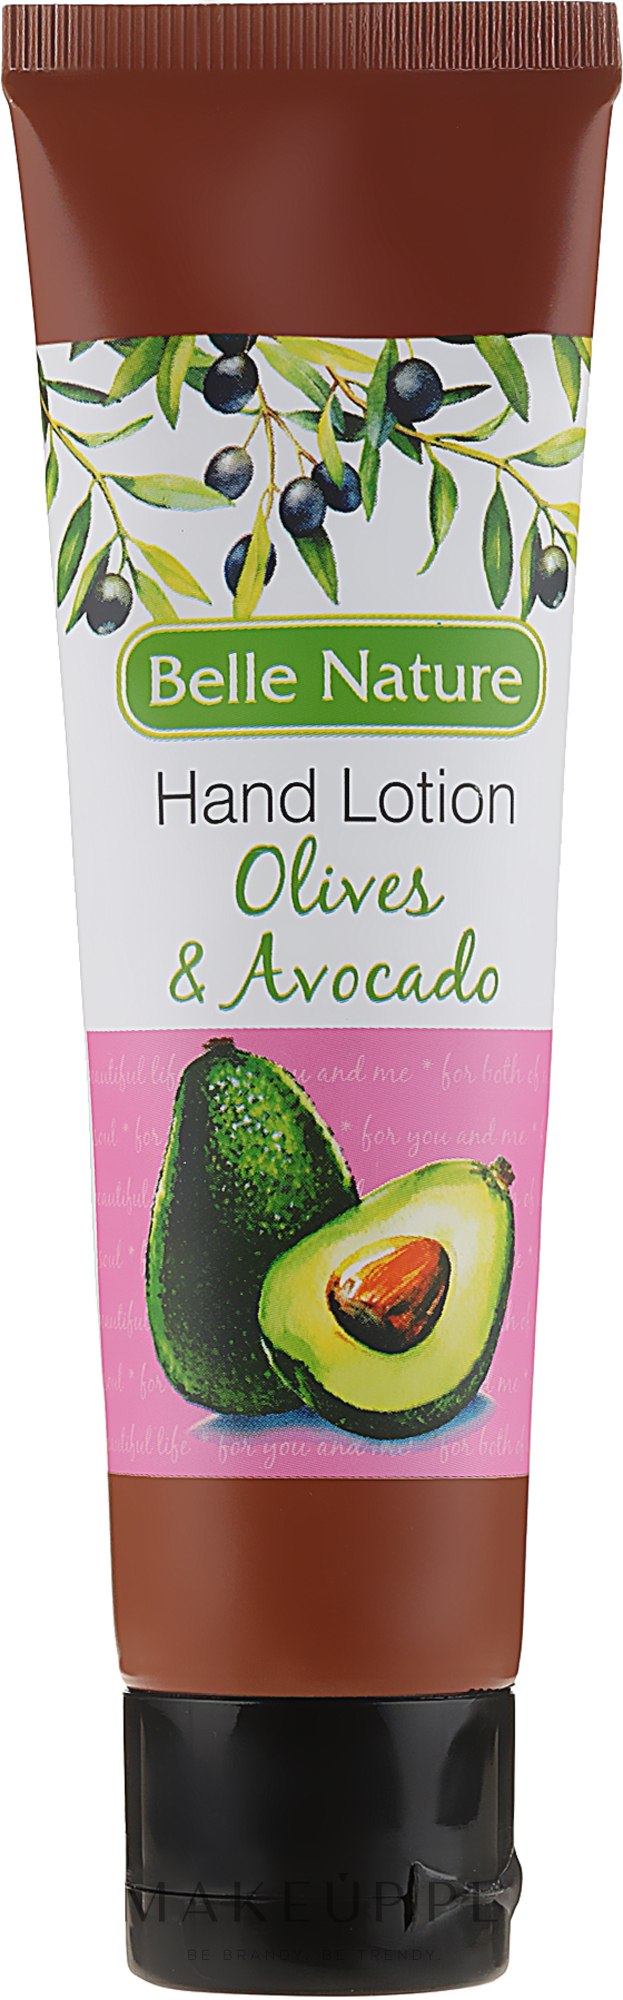 Balsam-krem do rąk o zapachu oliwek i awokado - Belle Nature Hand Lotion Olives&Avocado — Zdjęcie 60 ml